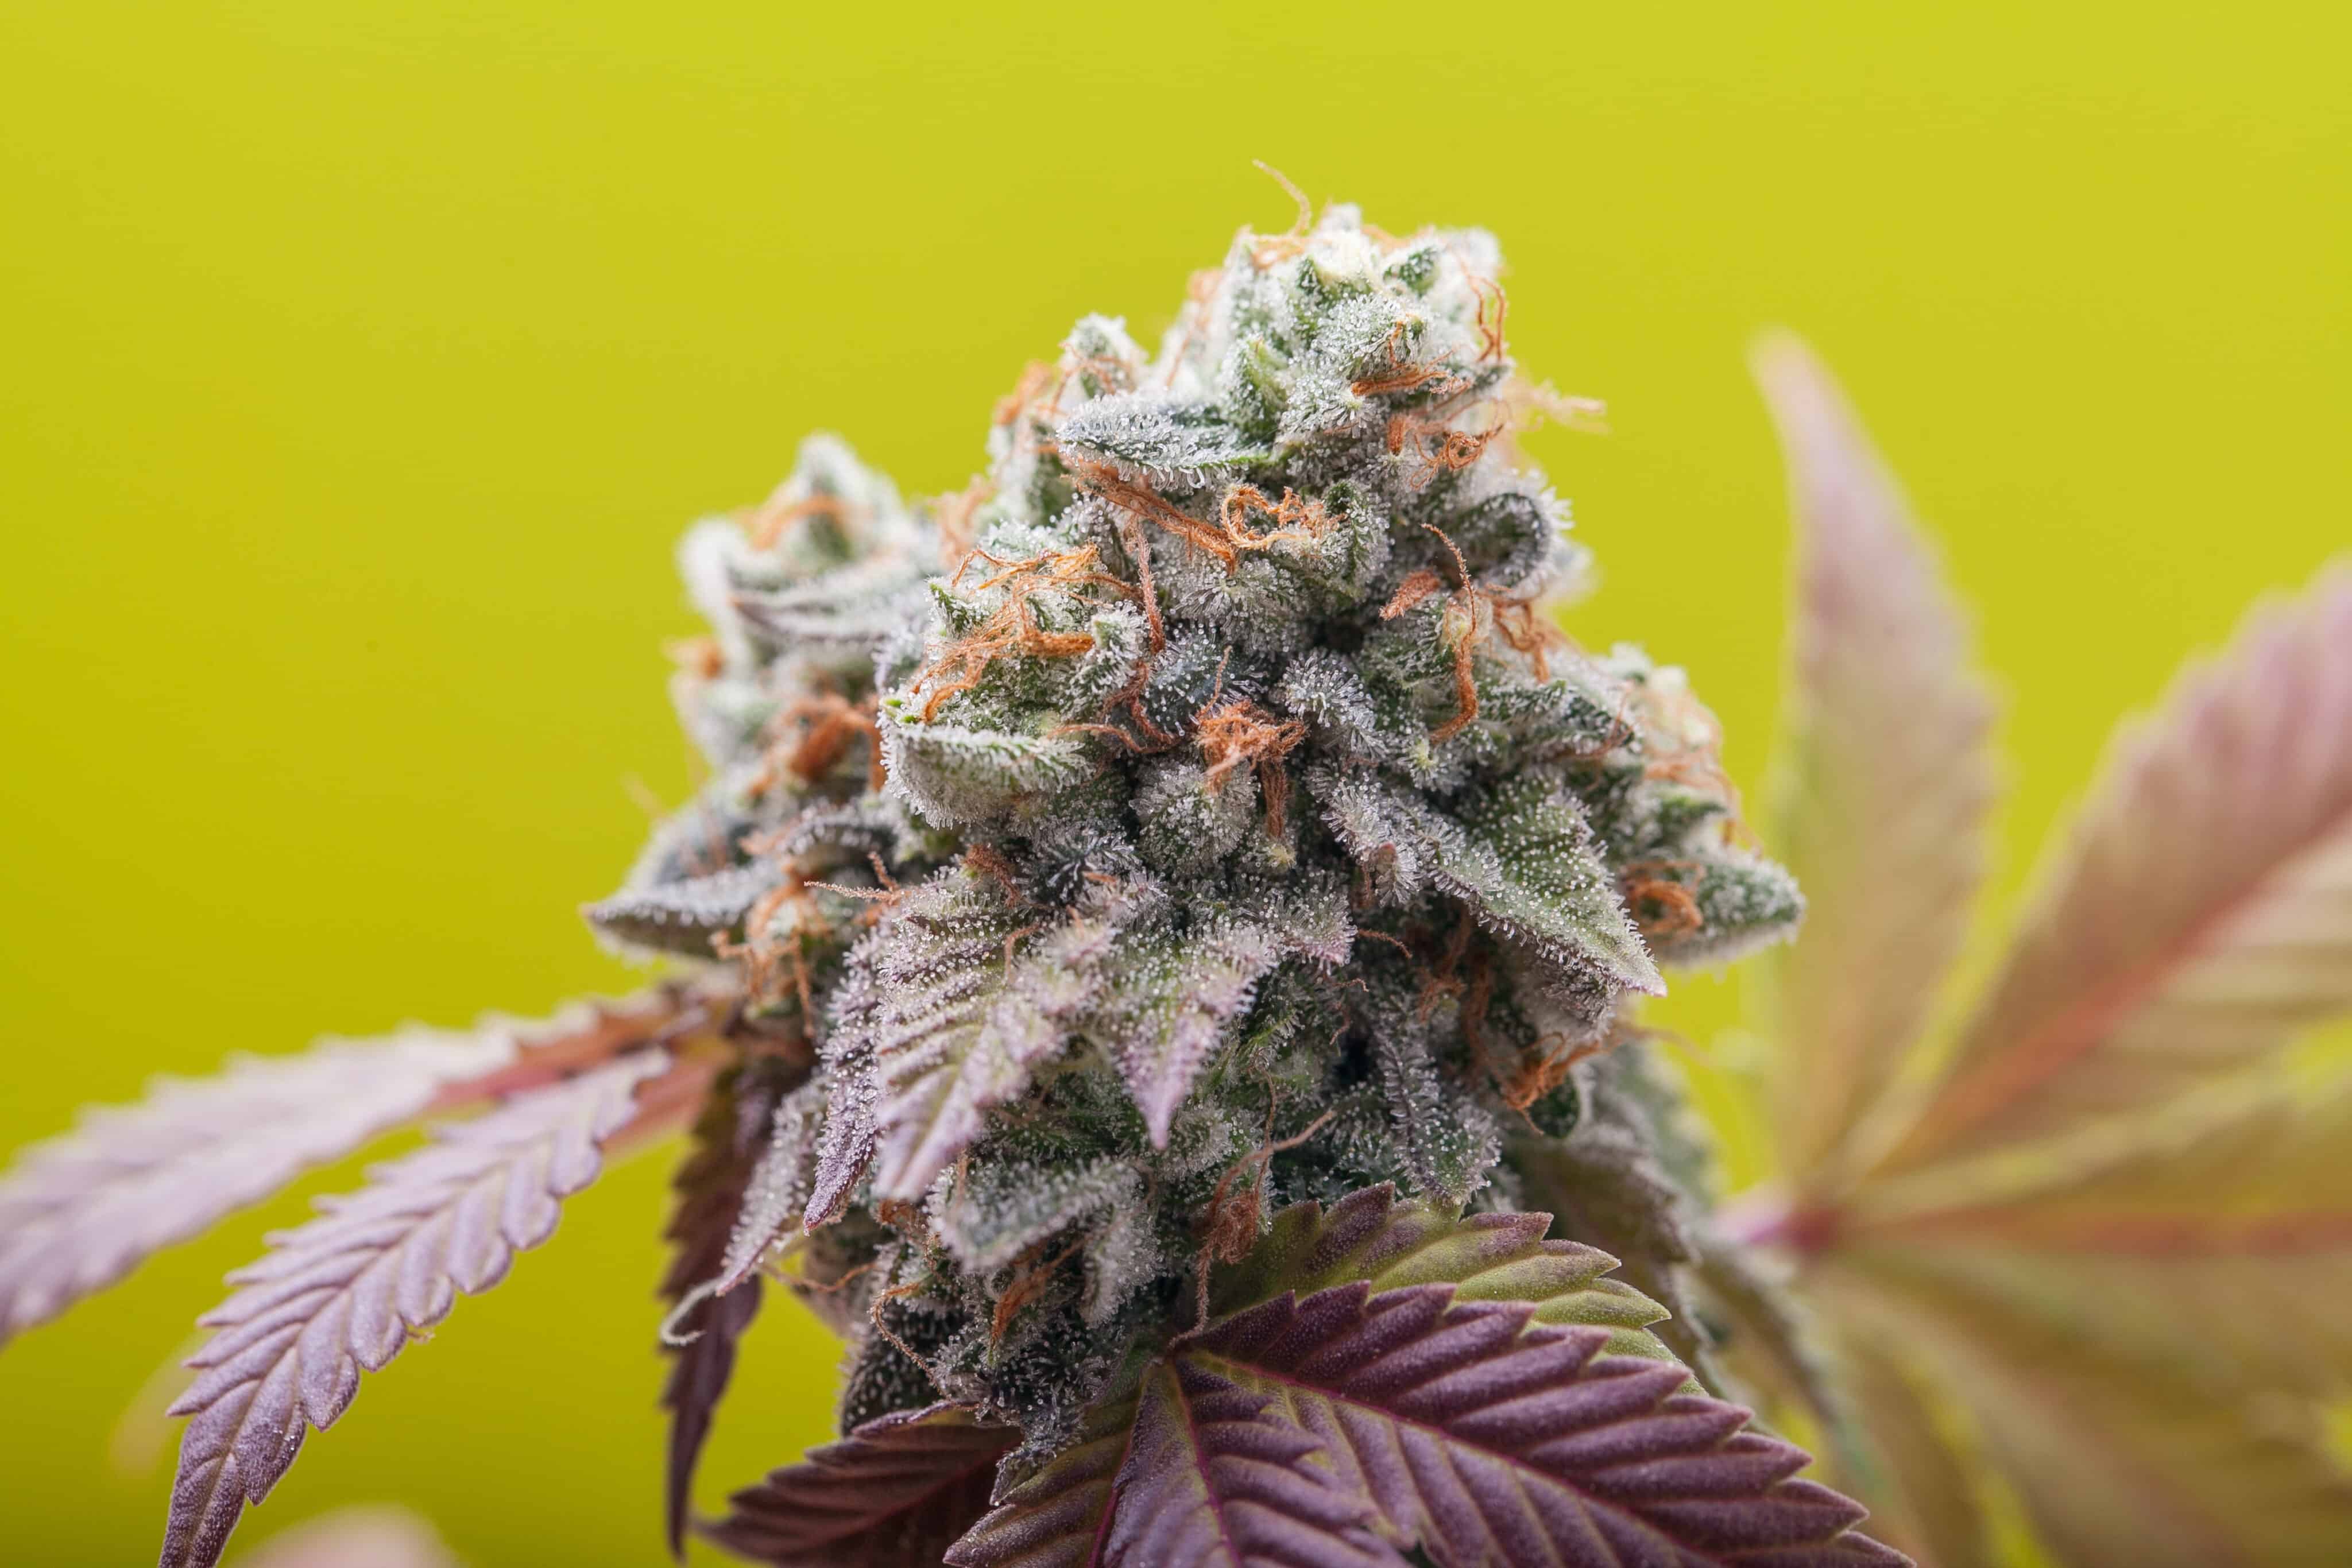 Proposal in Washington Seeks to Raise Legal Cannabis Age to 25